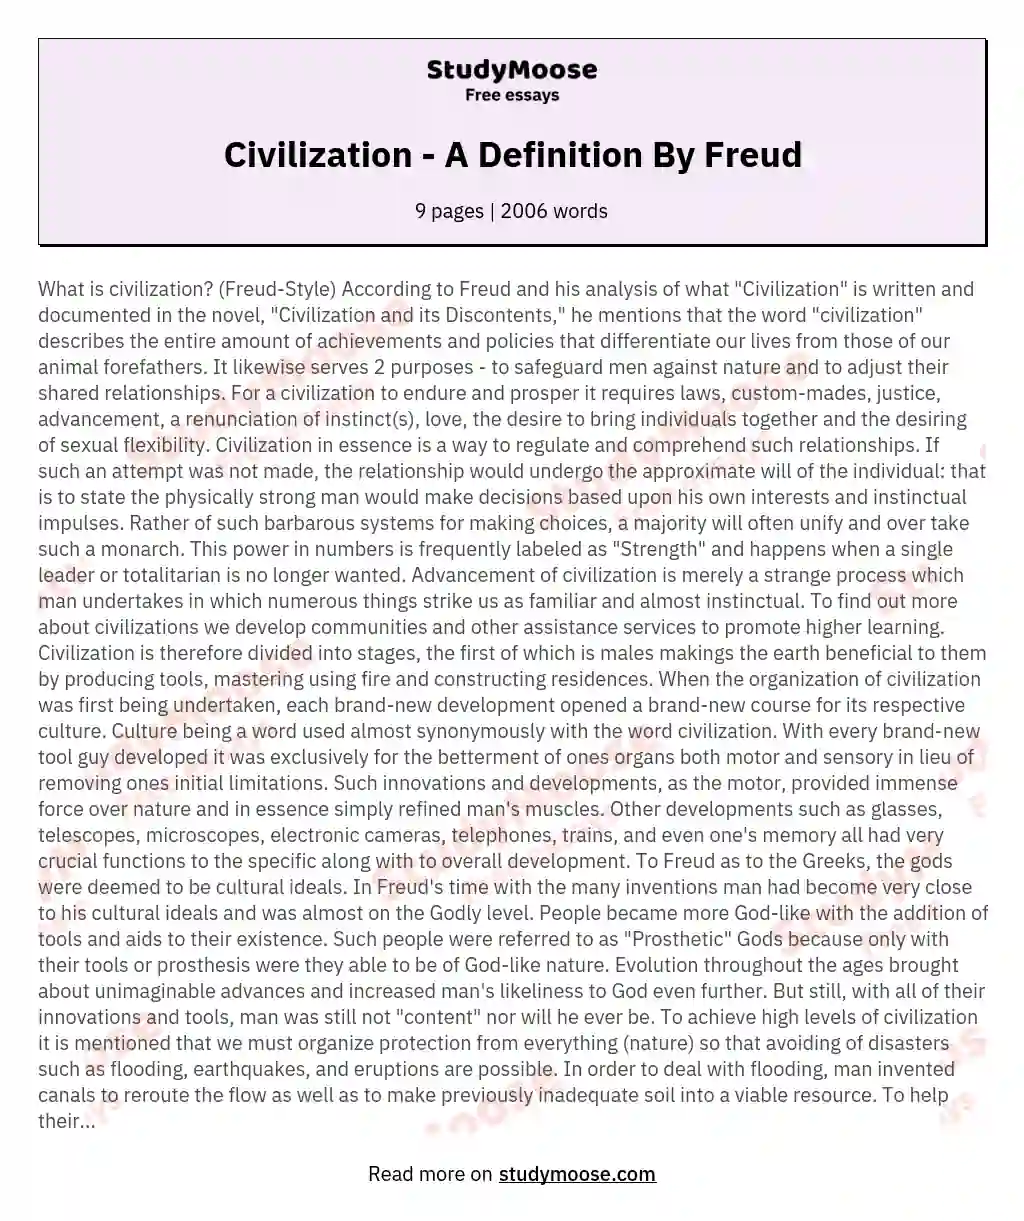 Civilization - A Definition By Freud